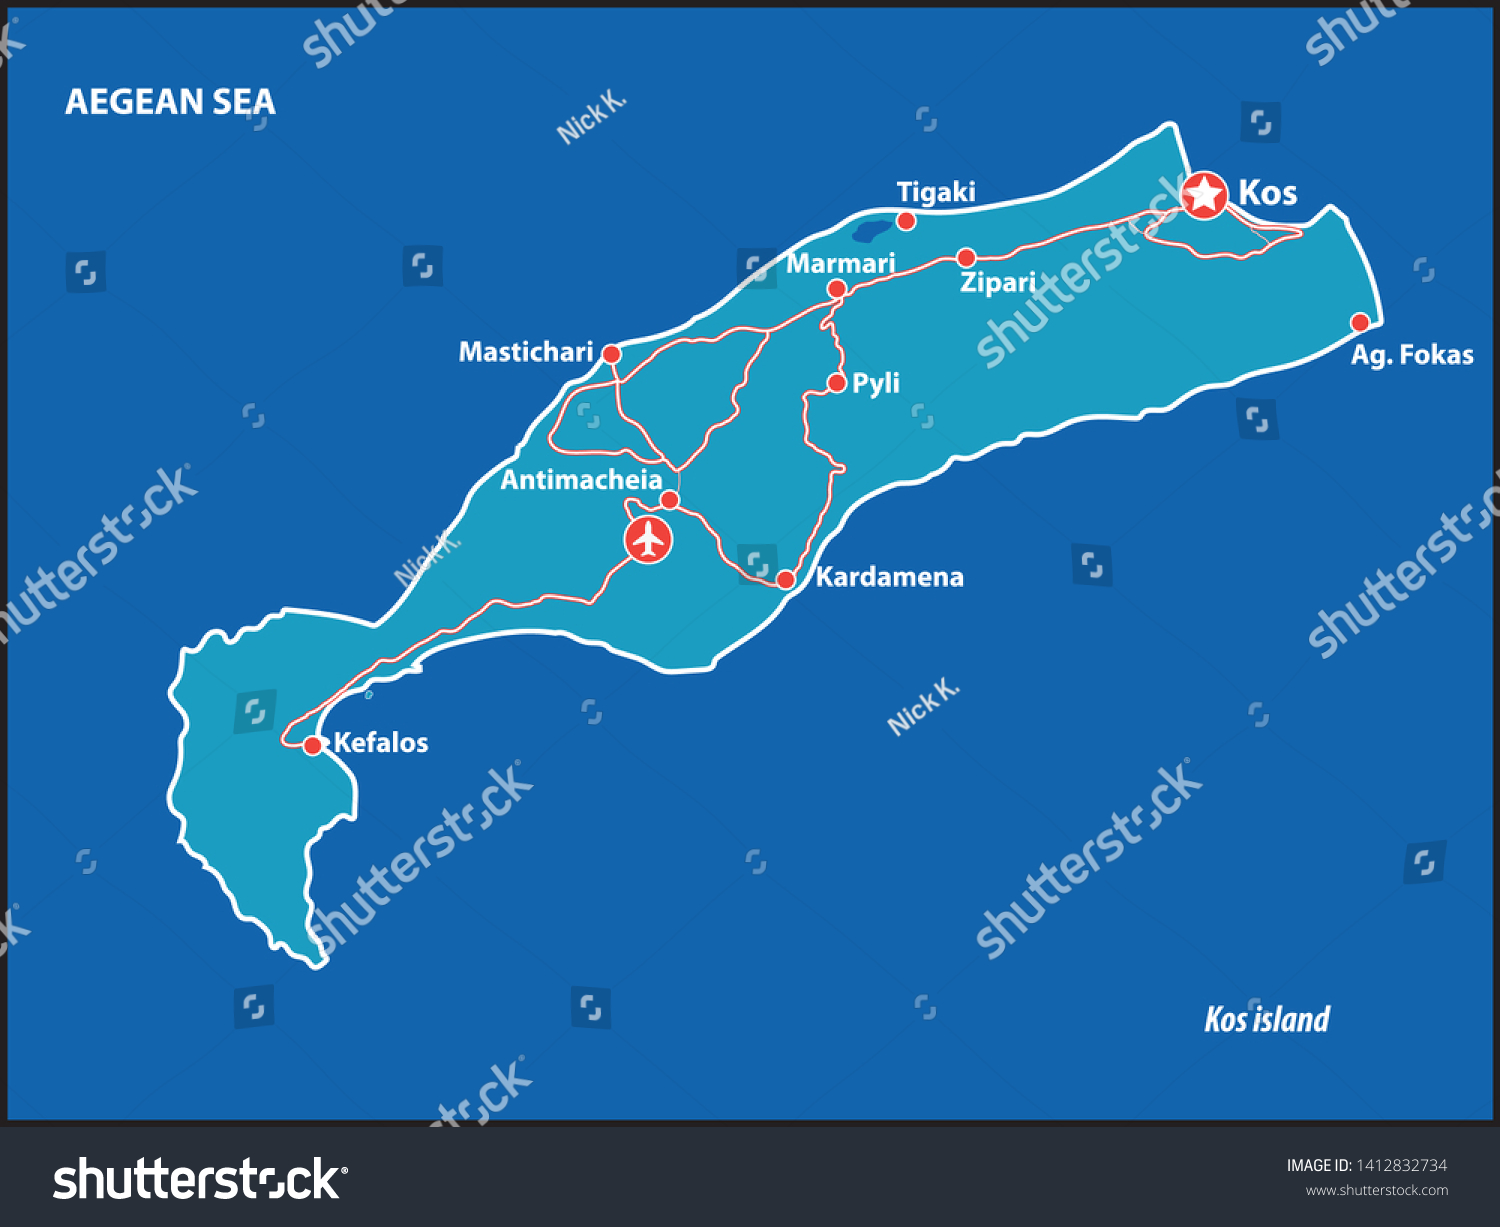 Kos Island Vector Map Greece This Stock Vector Royalty Free 1412832734 4709